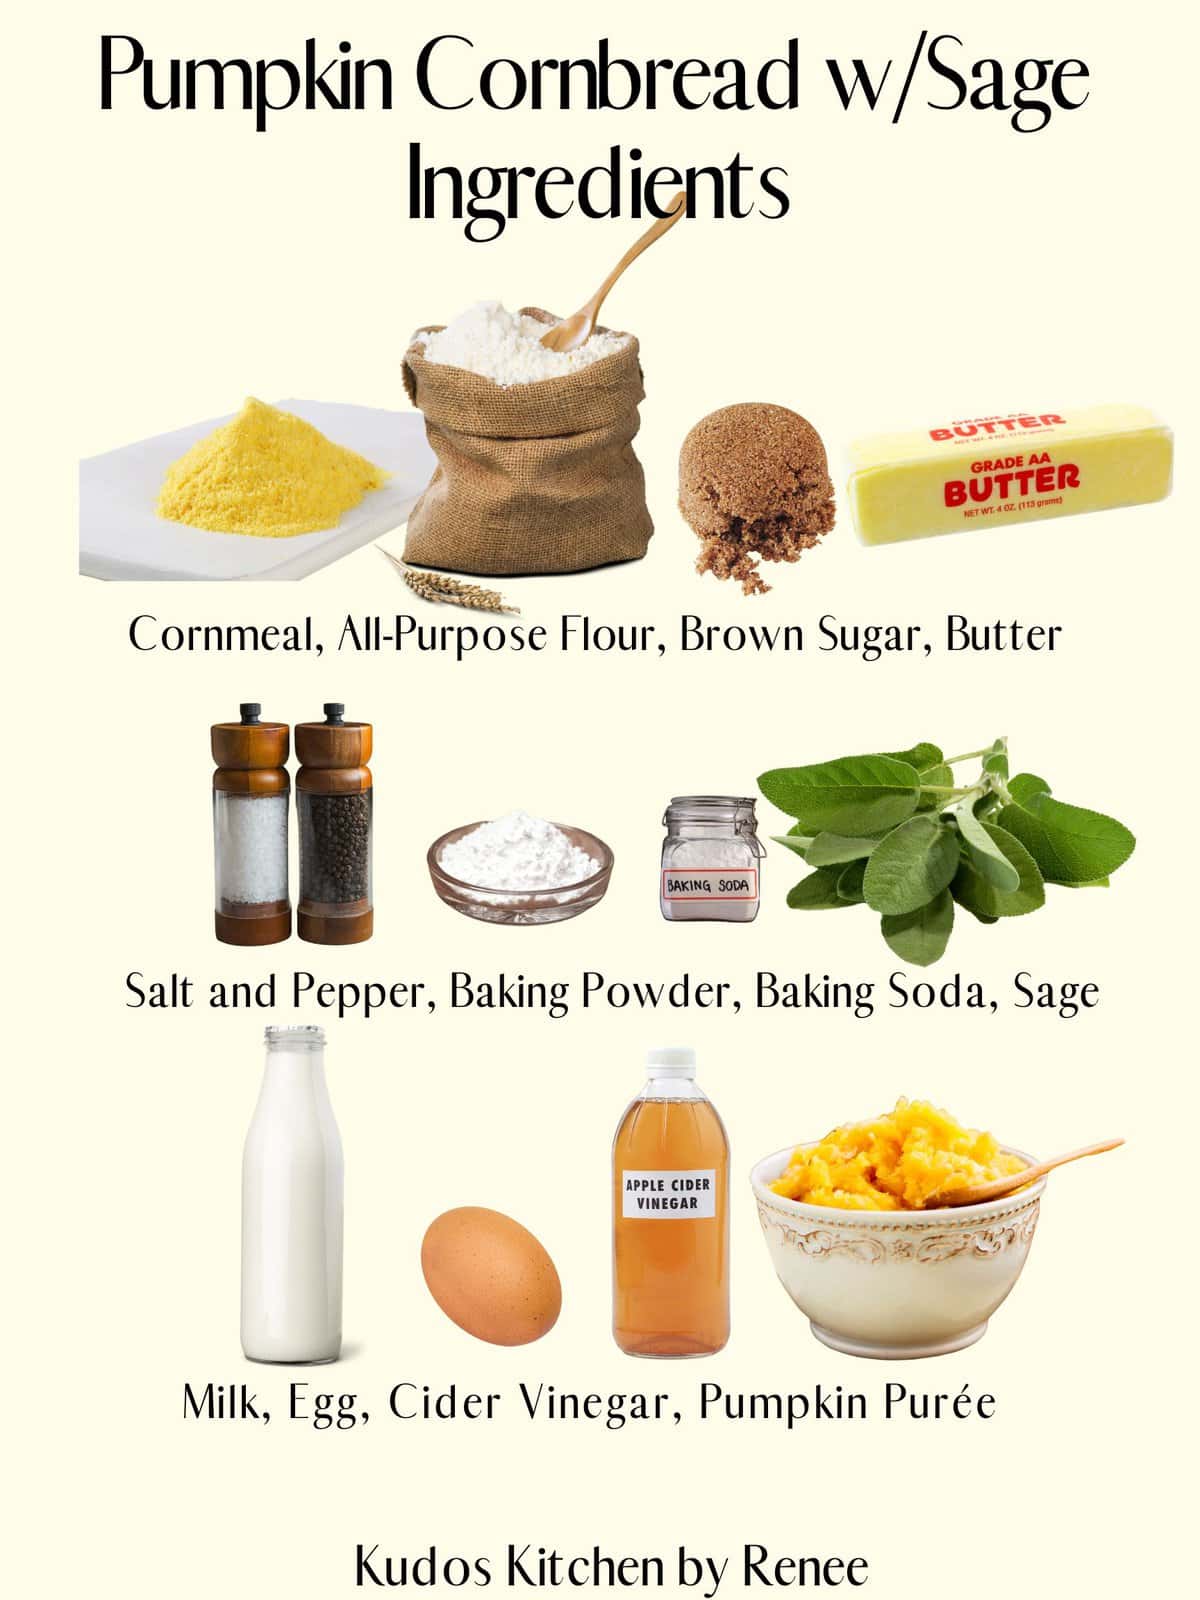 A visual ingredient list for Pumpkin Cornbread with Sage.